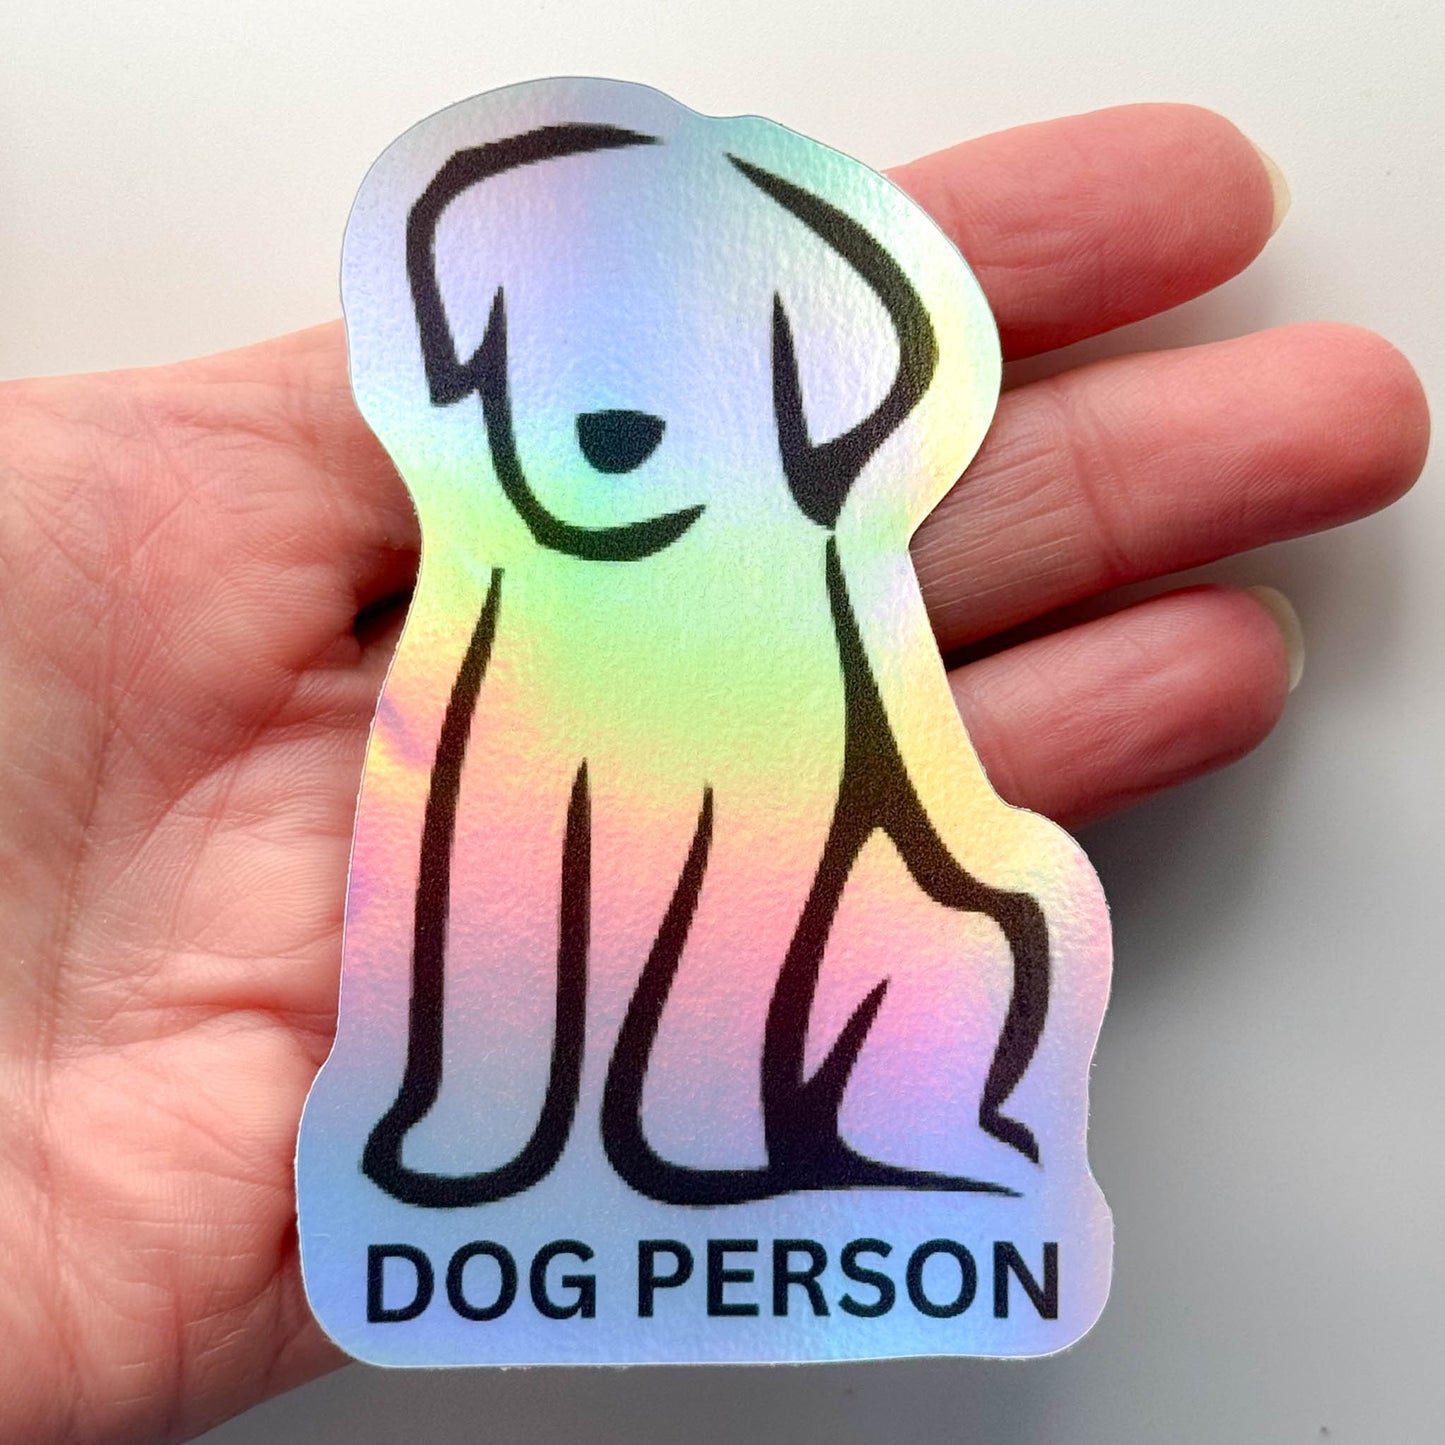 Dog Person - Holographic Sticker